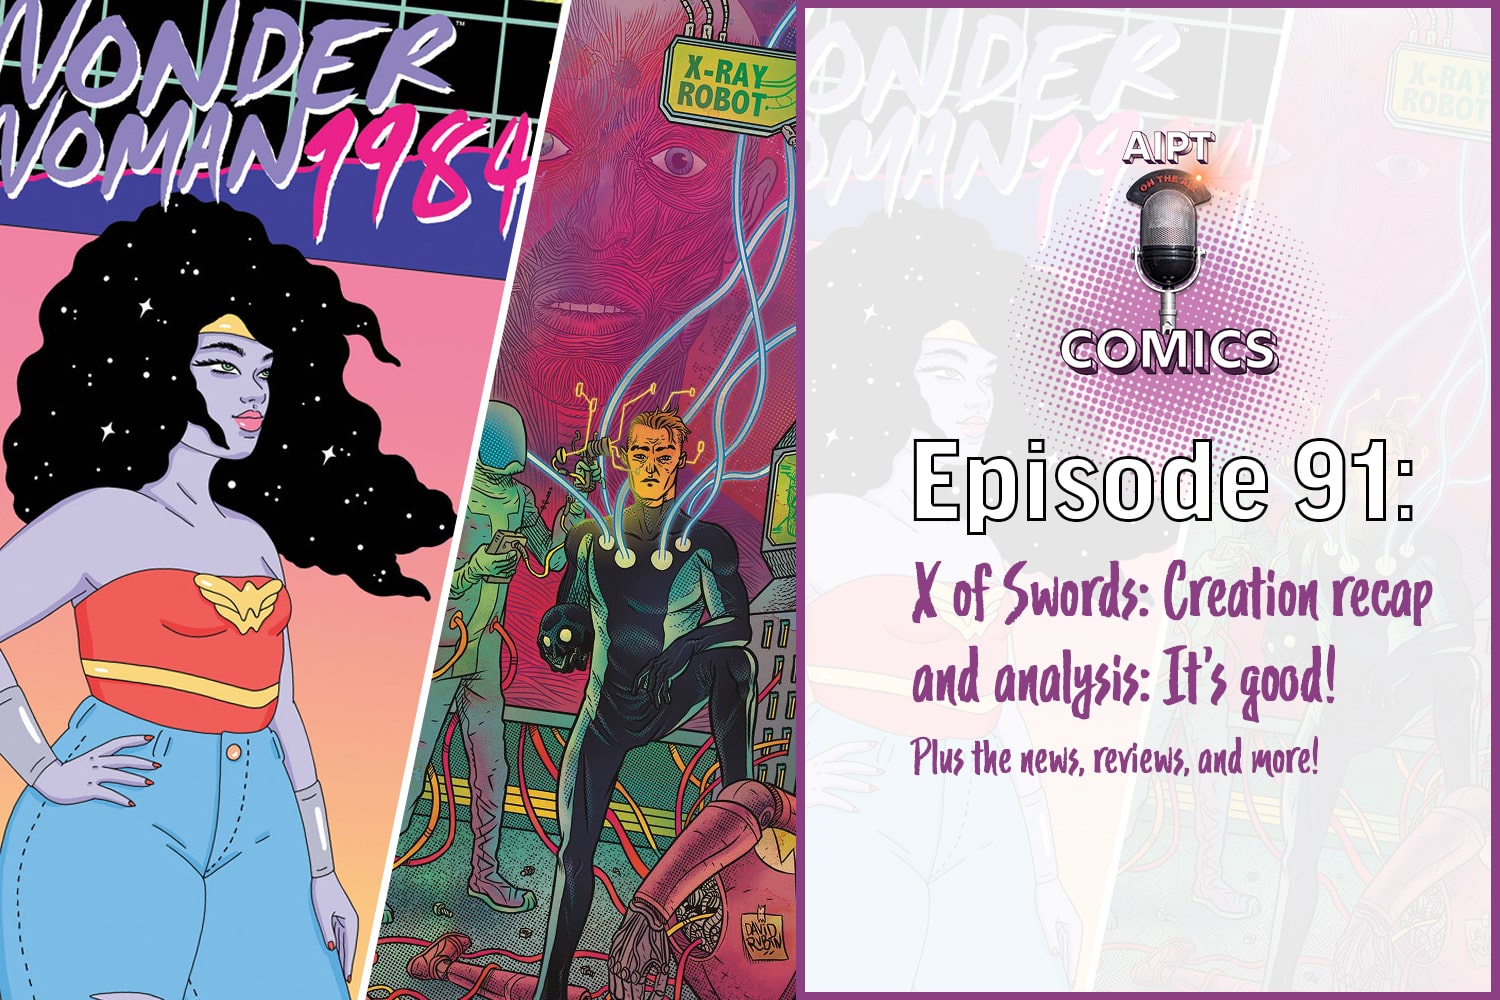 AIPT Comics Podcast Episode 91: Recap and analysis of Marvel's next event 'X of Swords'